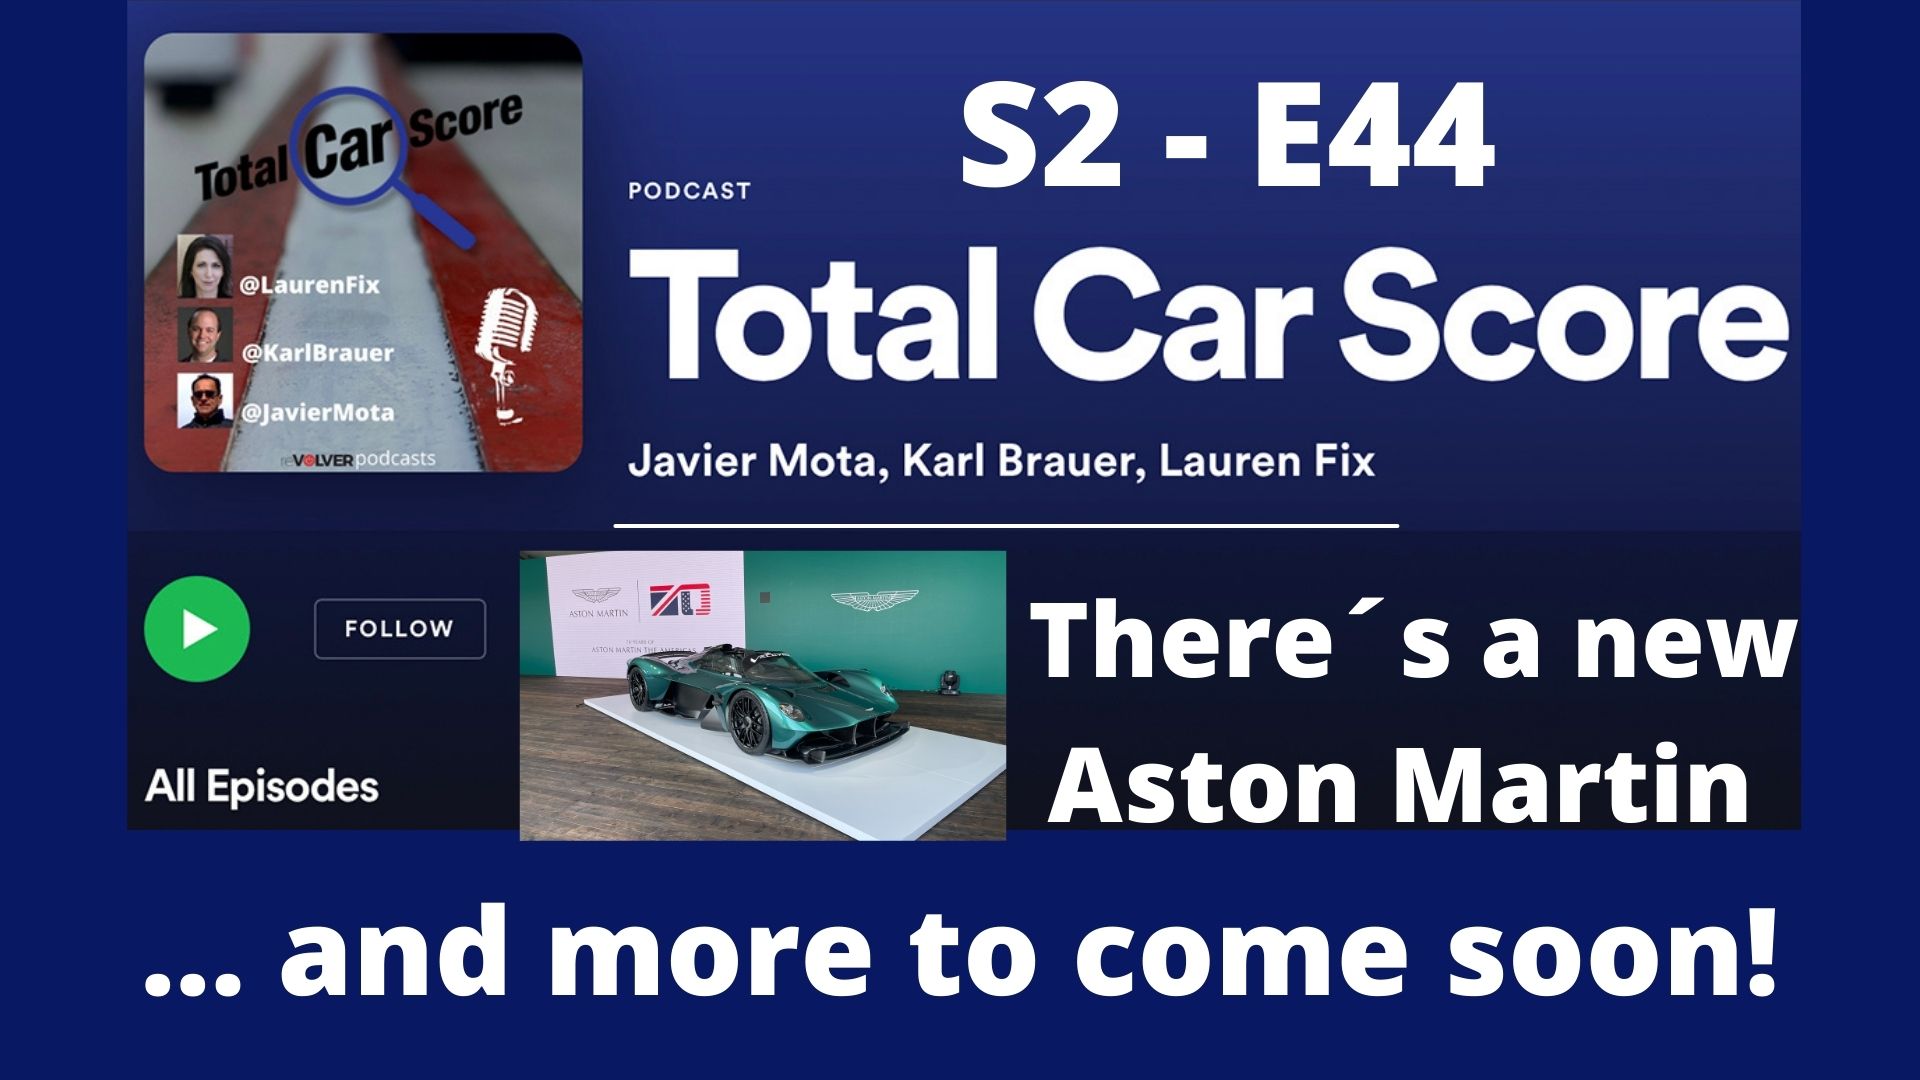 Total Car Score Podcast S2 E44